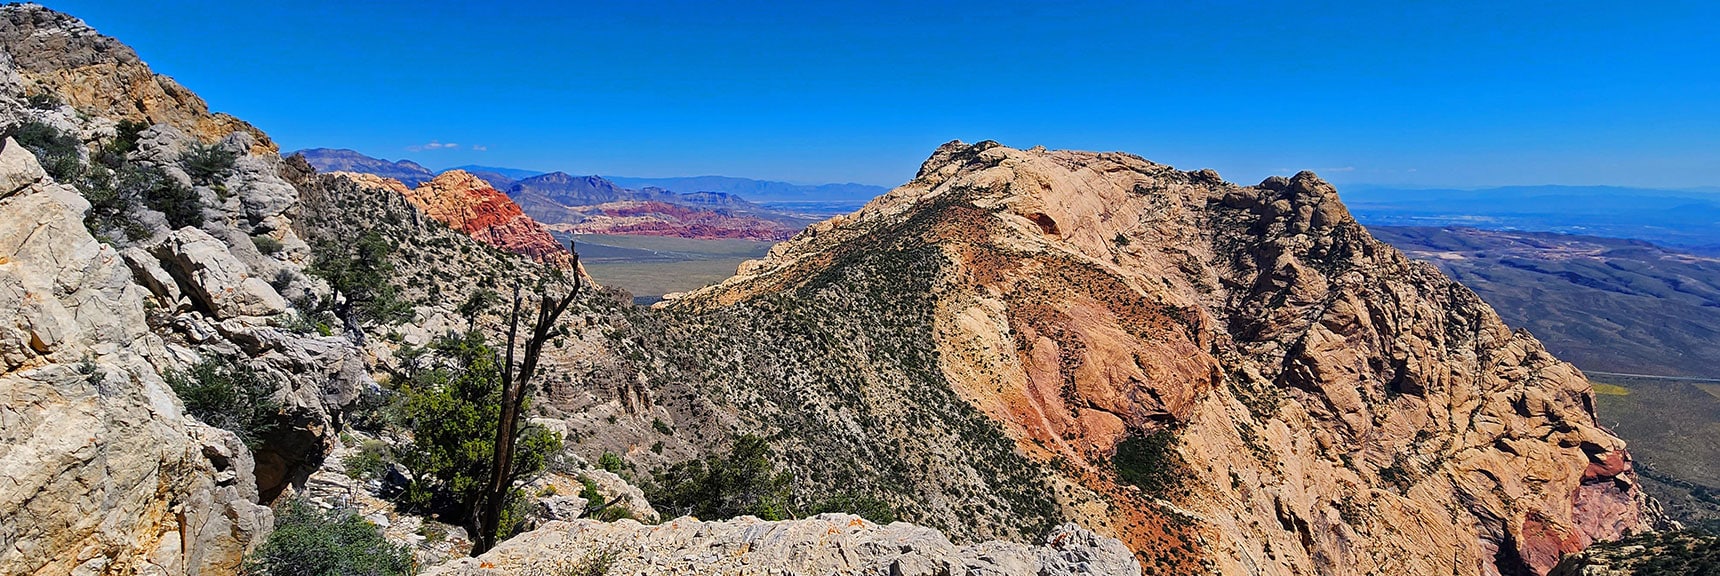 View of Mt. Wilson from Same Spot on Rainbow Mt. Upper Crest Ridgeline | Landmark Bluff | Lovell Canyon, Nevada